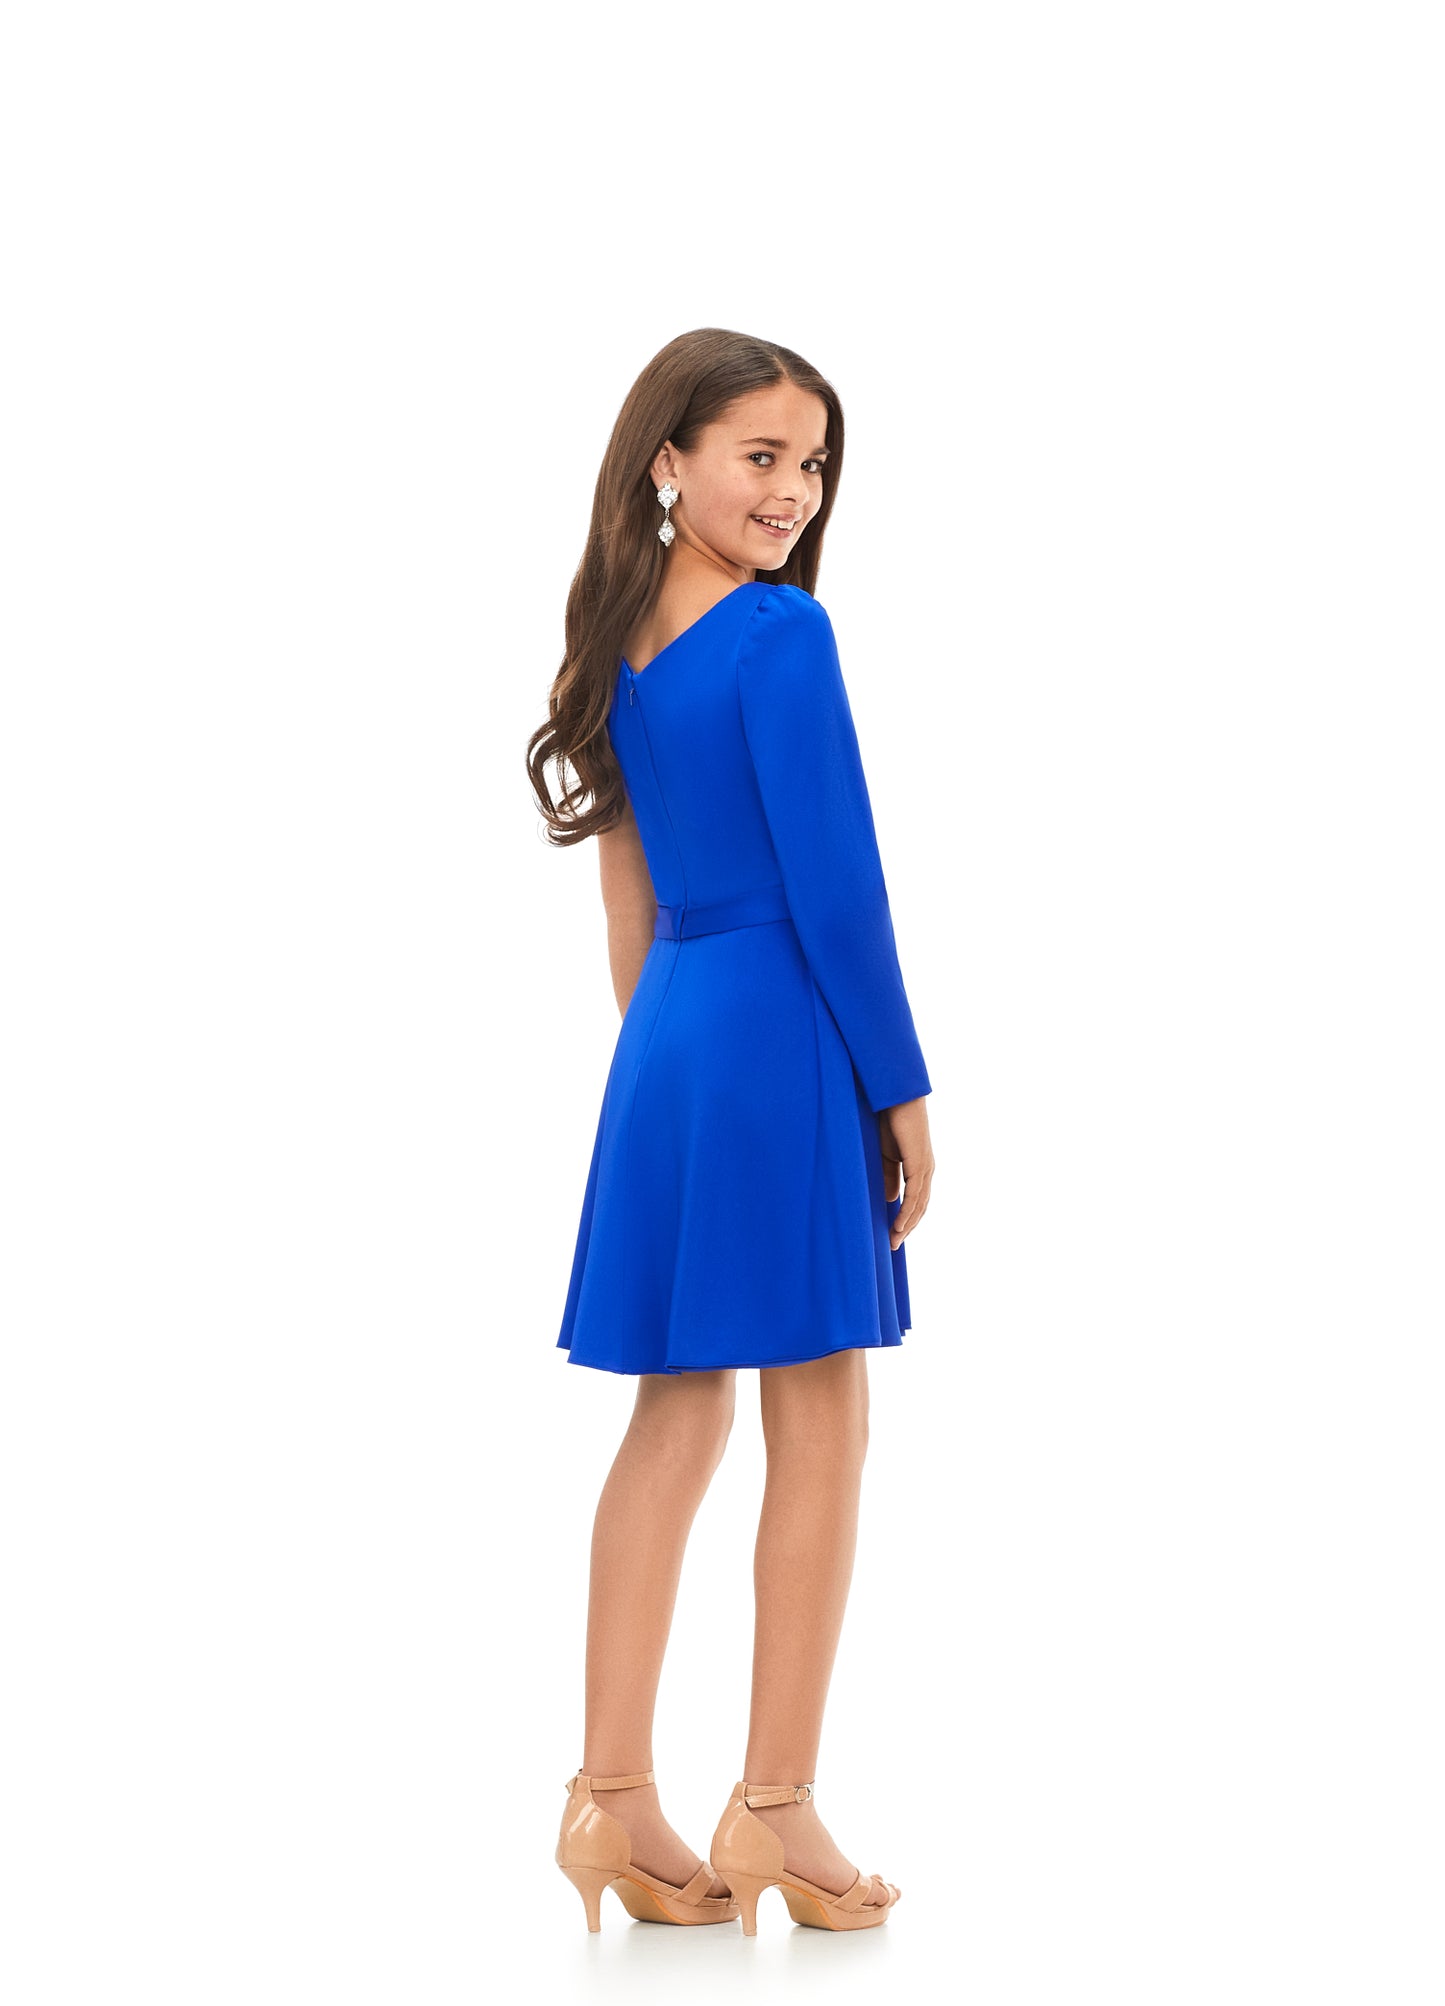 Ashley Lauren Kids 8171 Royal Blue Girls One Sleeve Crepe Cocktail Dress